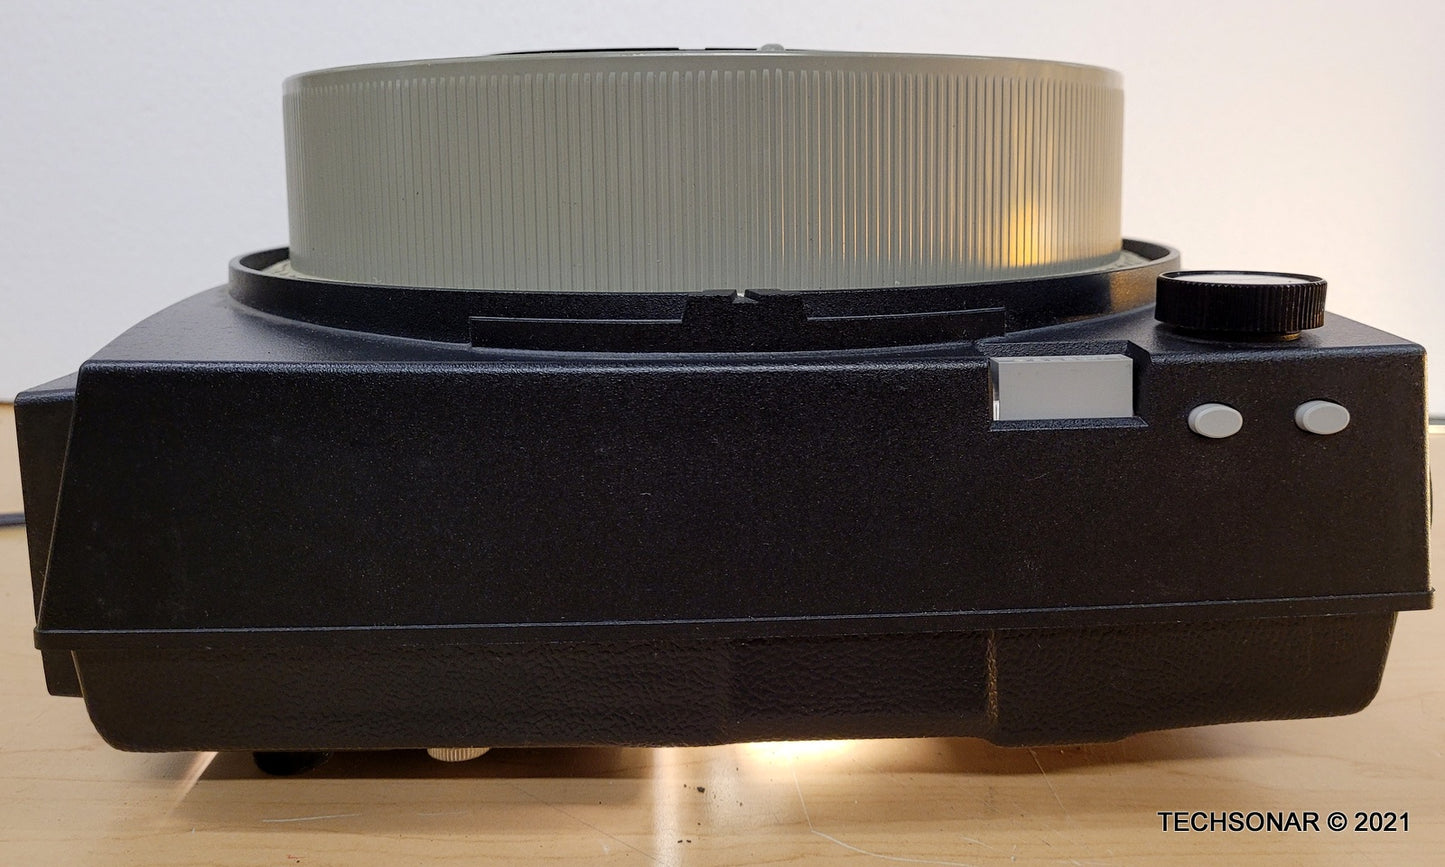 Kodak Carousel 760H Slide Projector 102mm f/2.8 - Power,Lamp,Fan,Lens Check OK